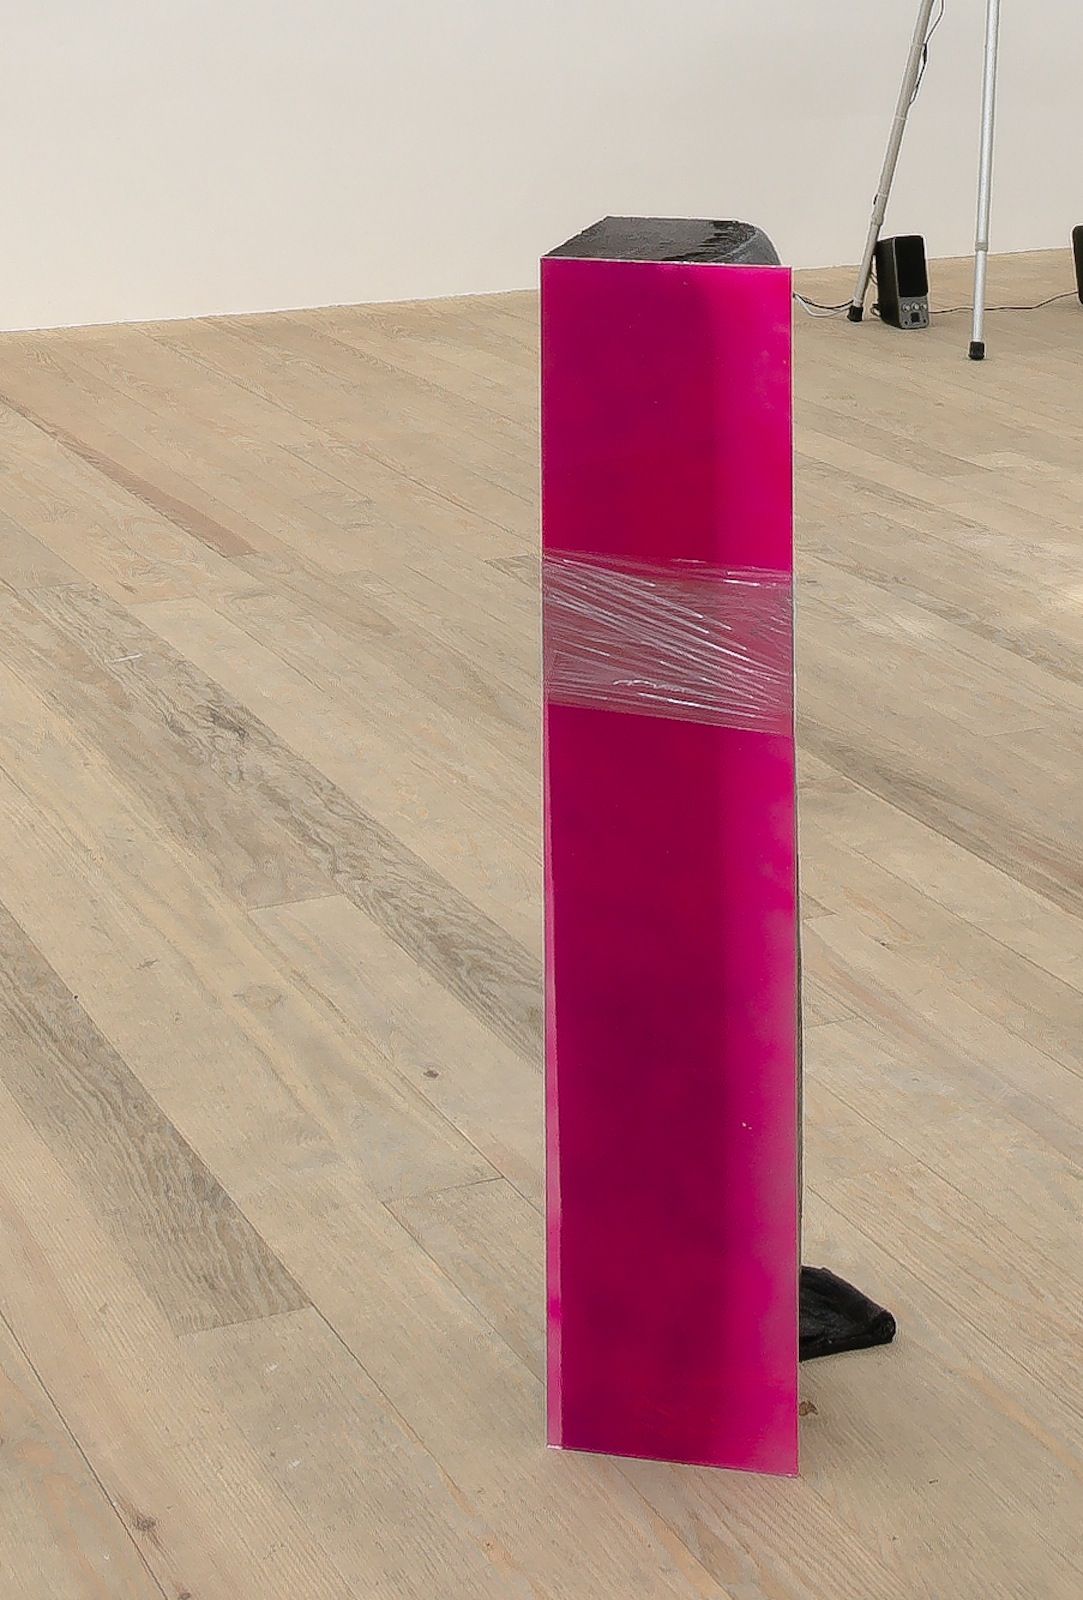 Cassie Raihl, SLICE, 2013, cast foam, spray paint, glass, plastic wrap, 39 × 8 × 8 in.